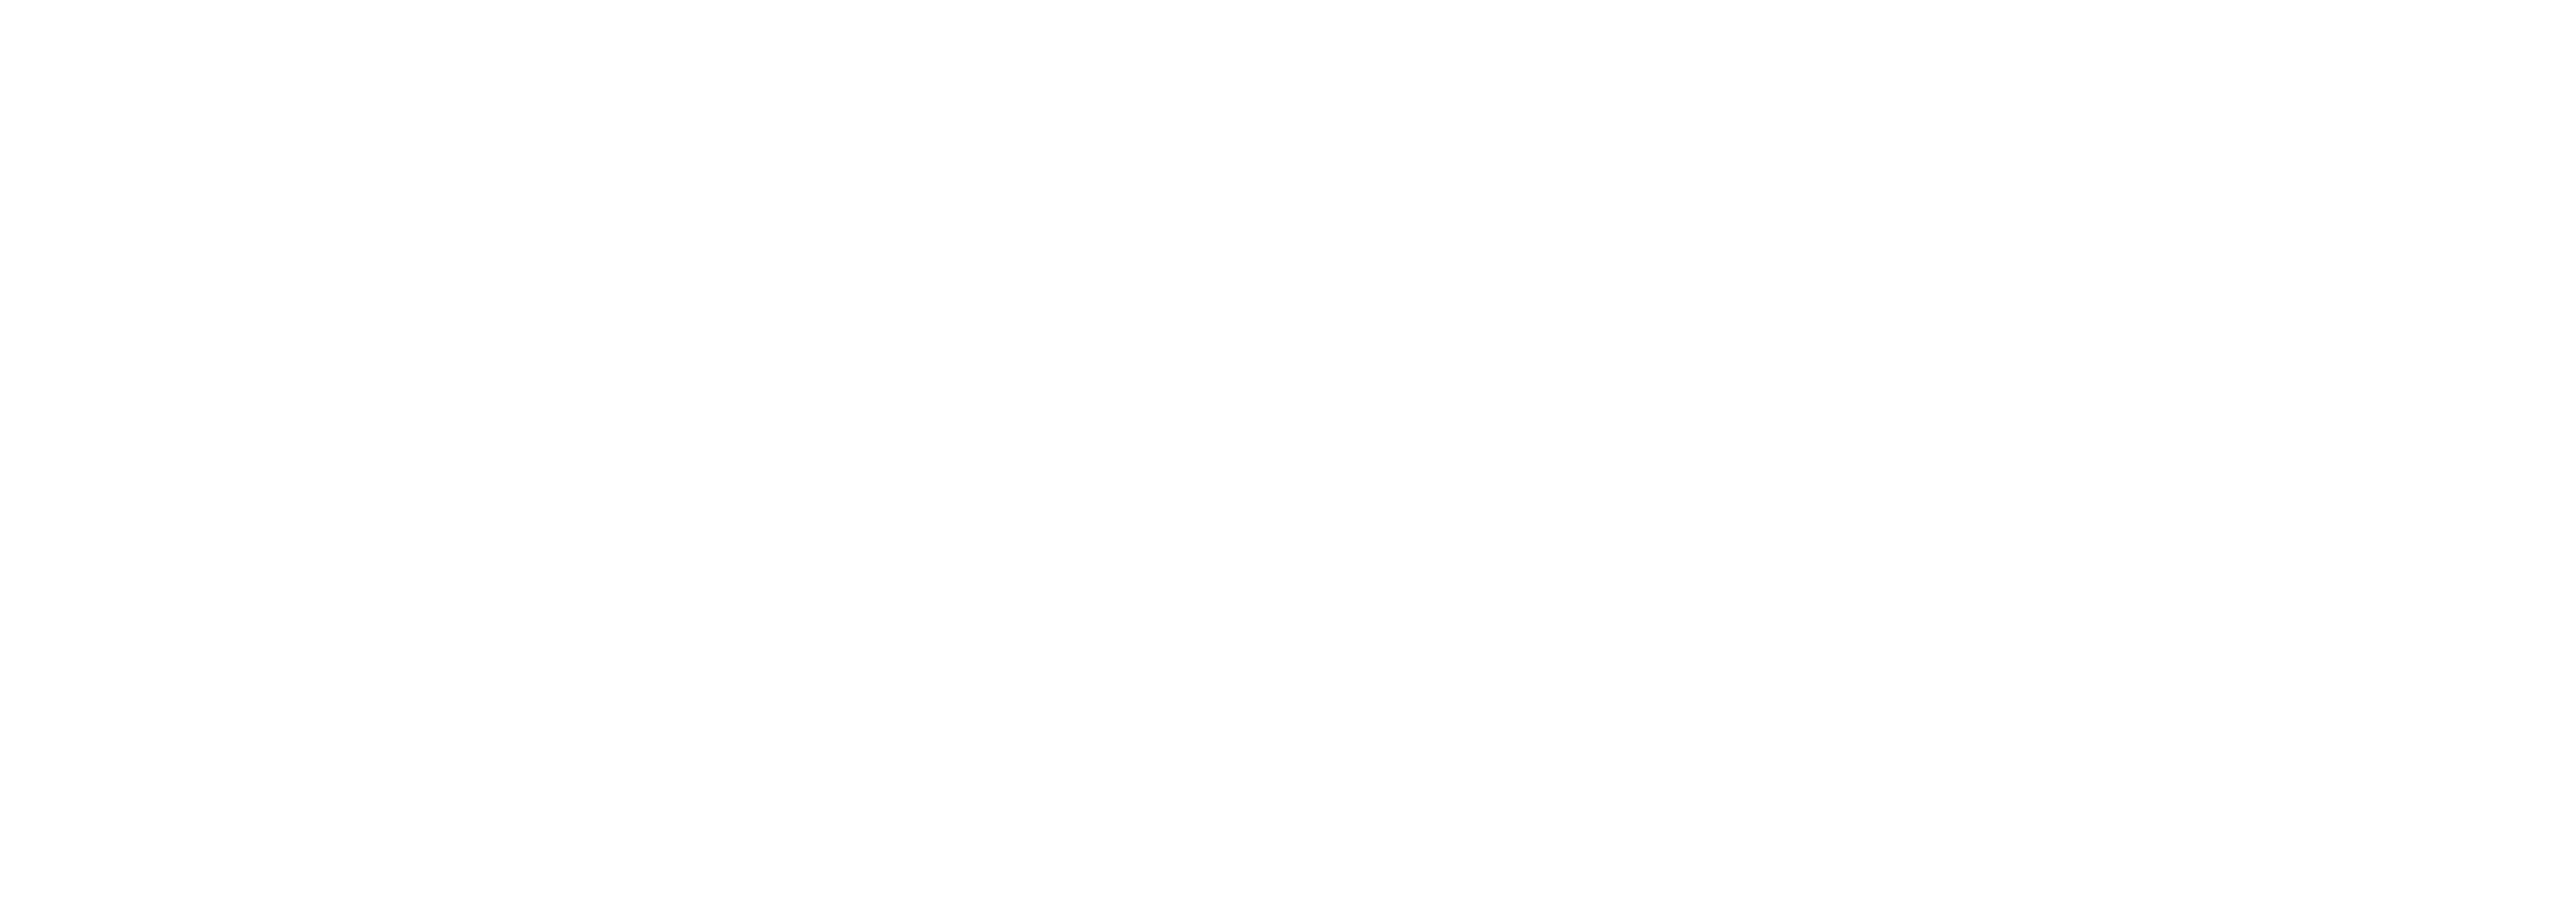 Impulse Online